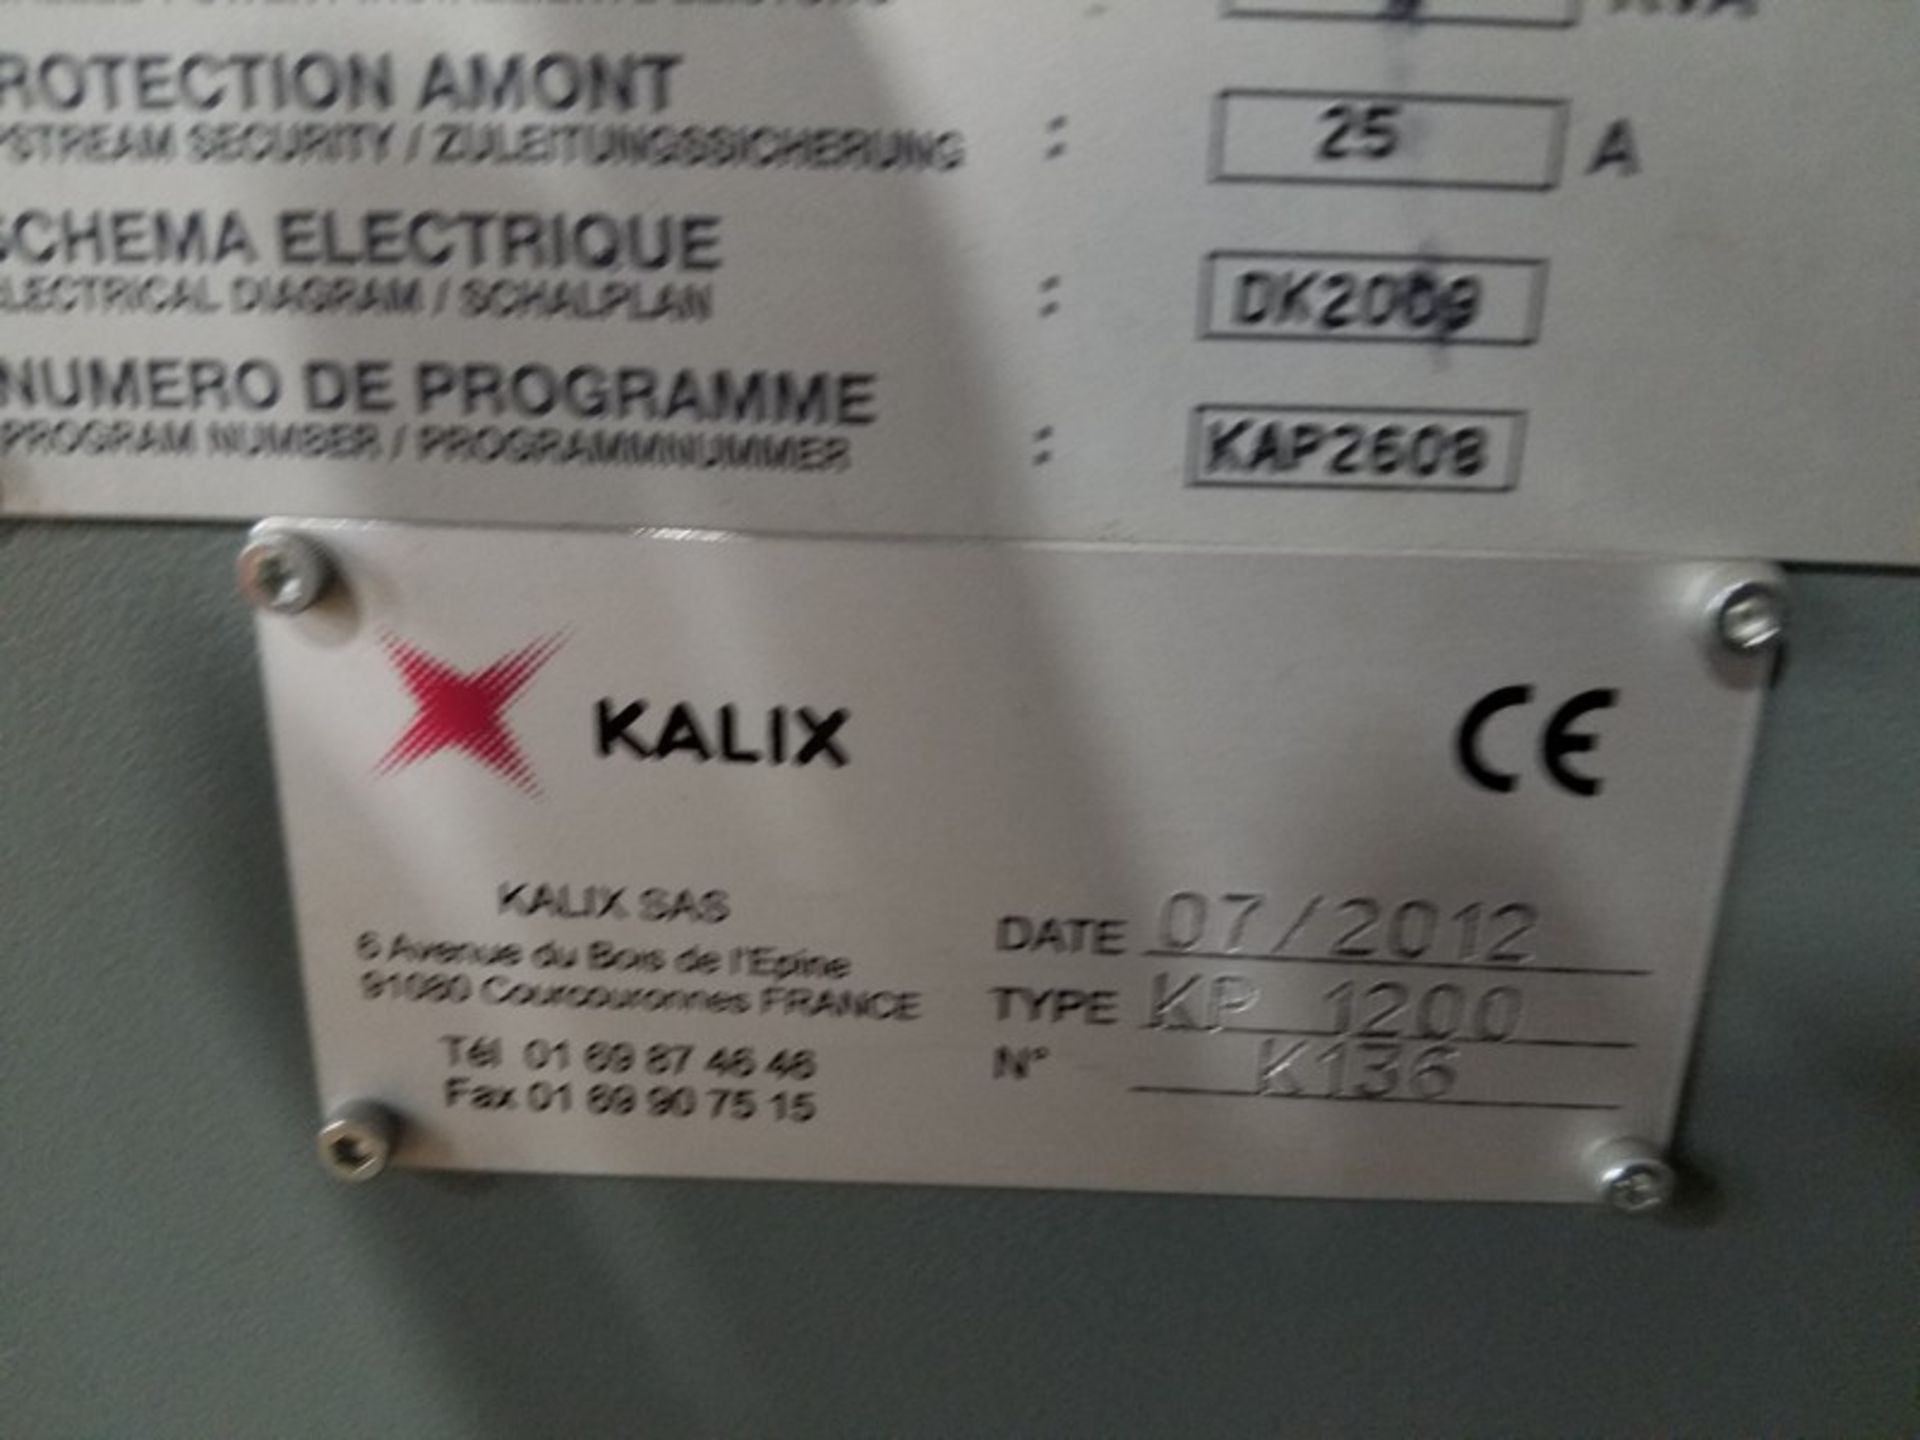 Kalix KP1200 Cartoner, cosmetic applications, serial # K136, volt 208, Date 07/2012, 120 ppm ( - Image 17 of 17